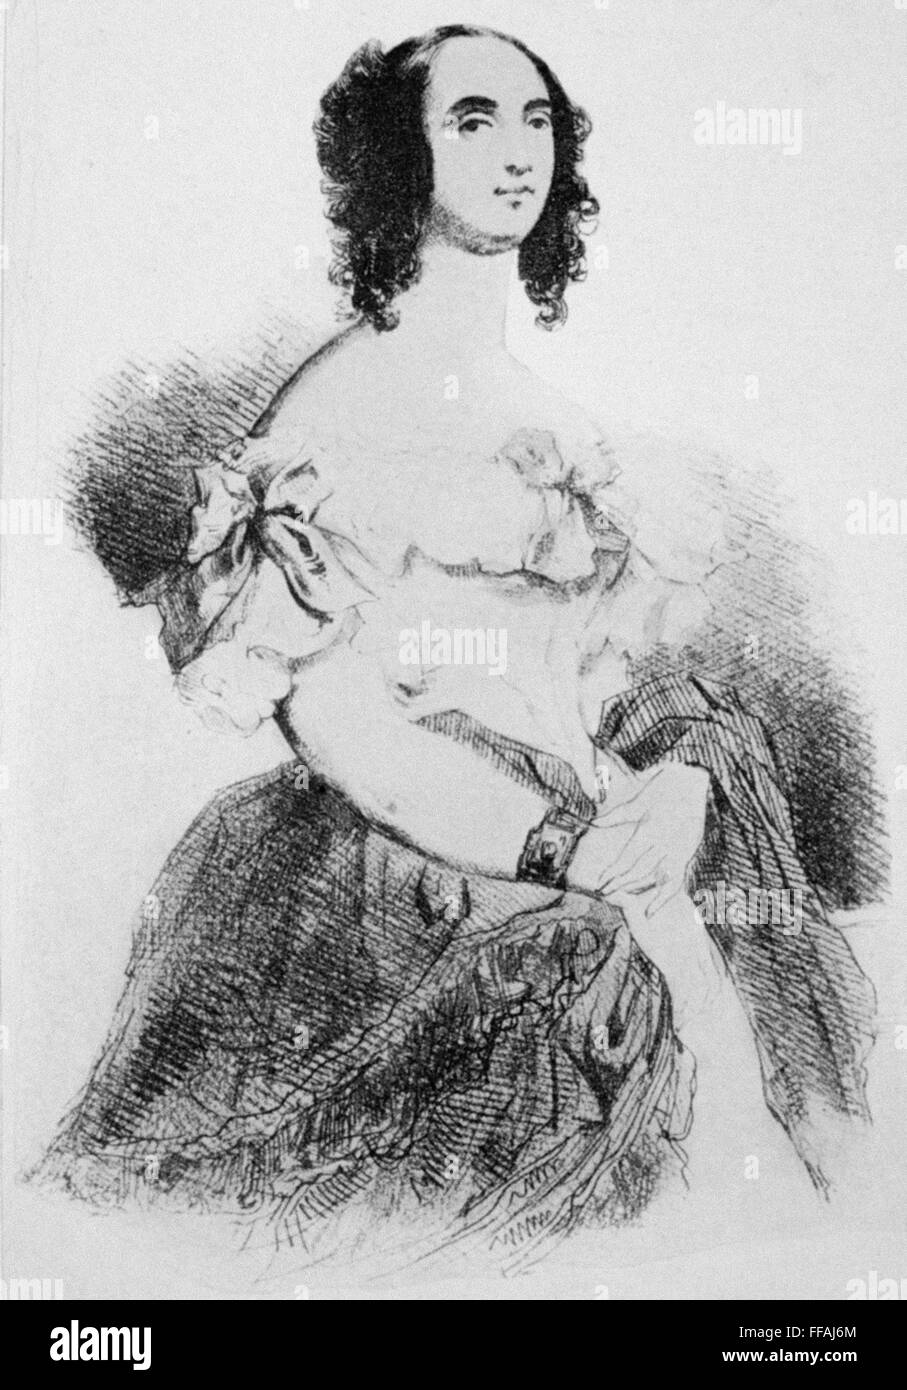 Adele hugo. Жена Виктора Гюго. Портрет жены Виктора Гюго Адели.